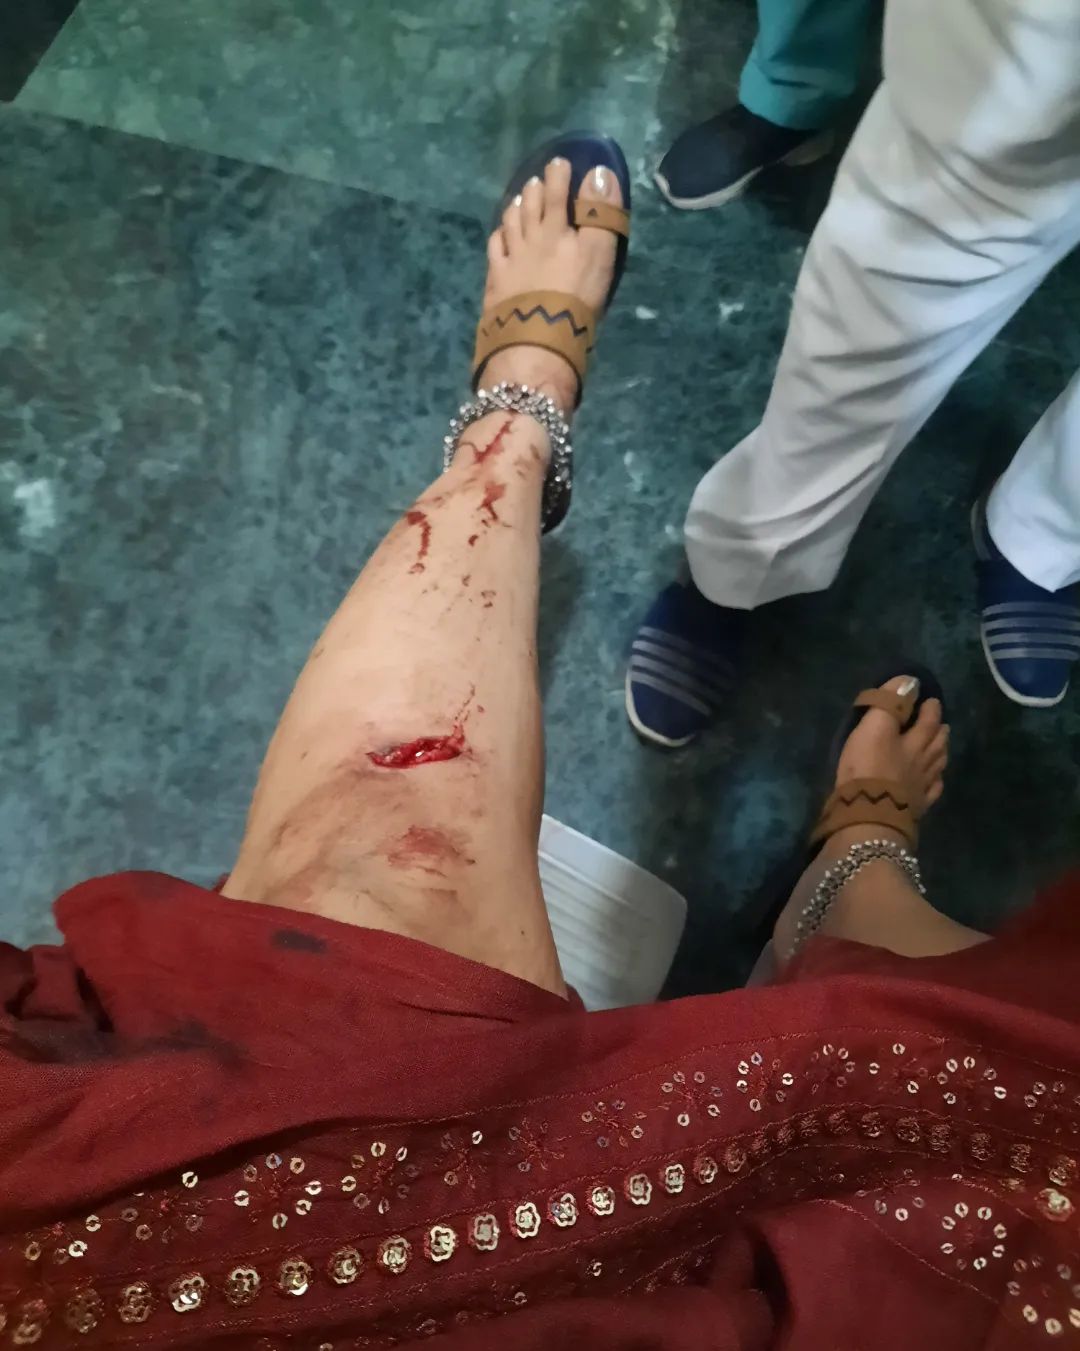 Tanushree Dutta Accident